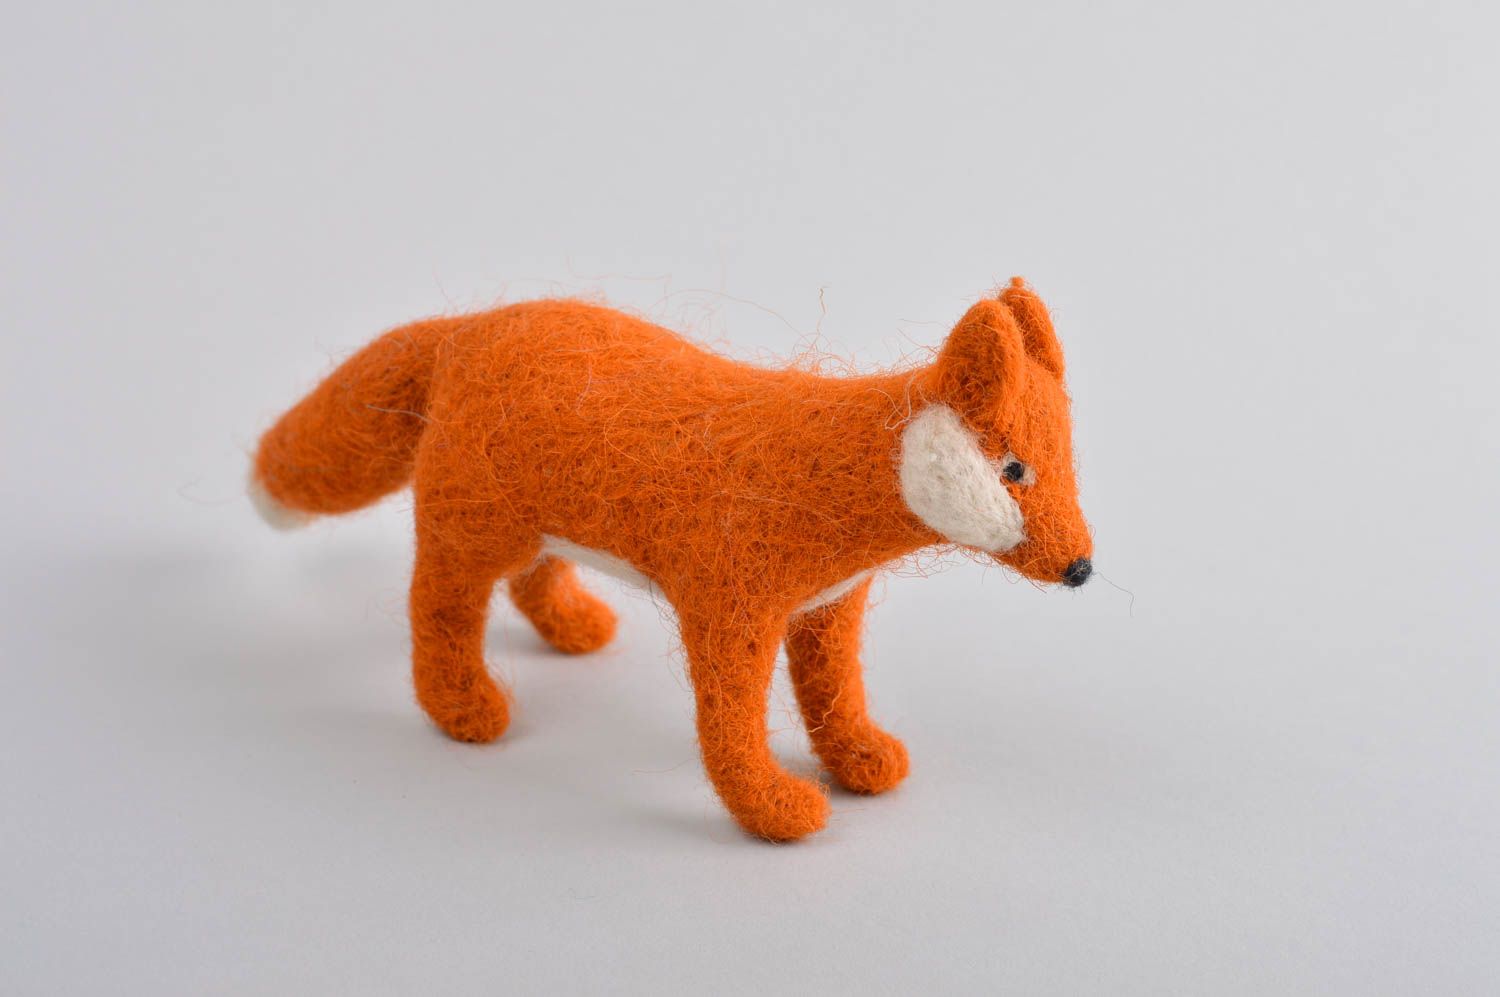 Handmade toy unusual toy for children decor ideas woolen animal toy gift ideas photo 3